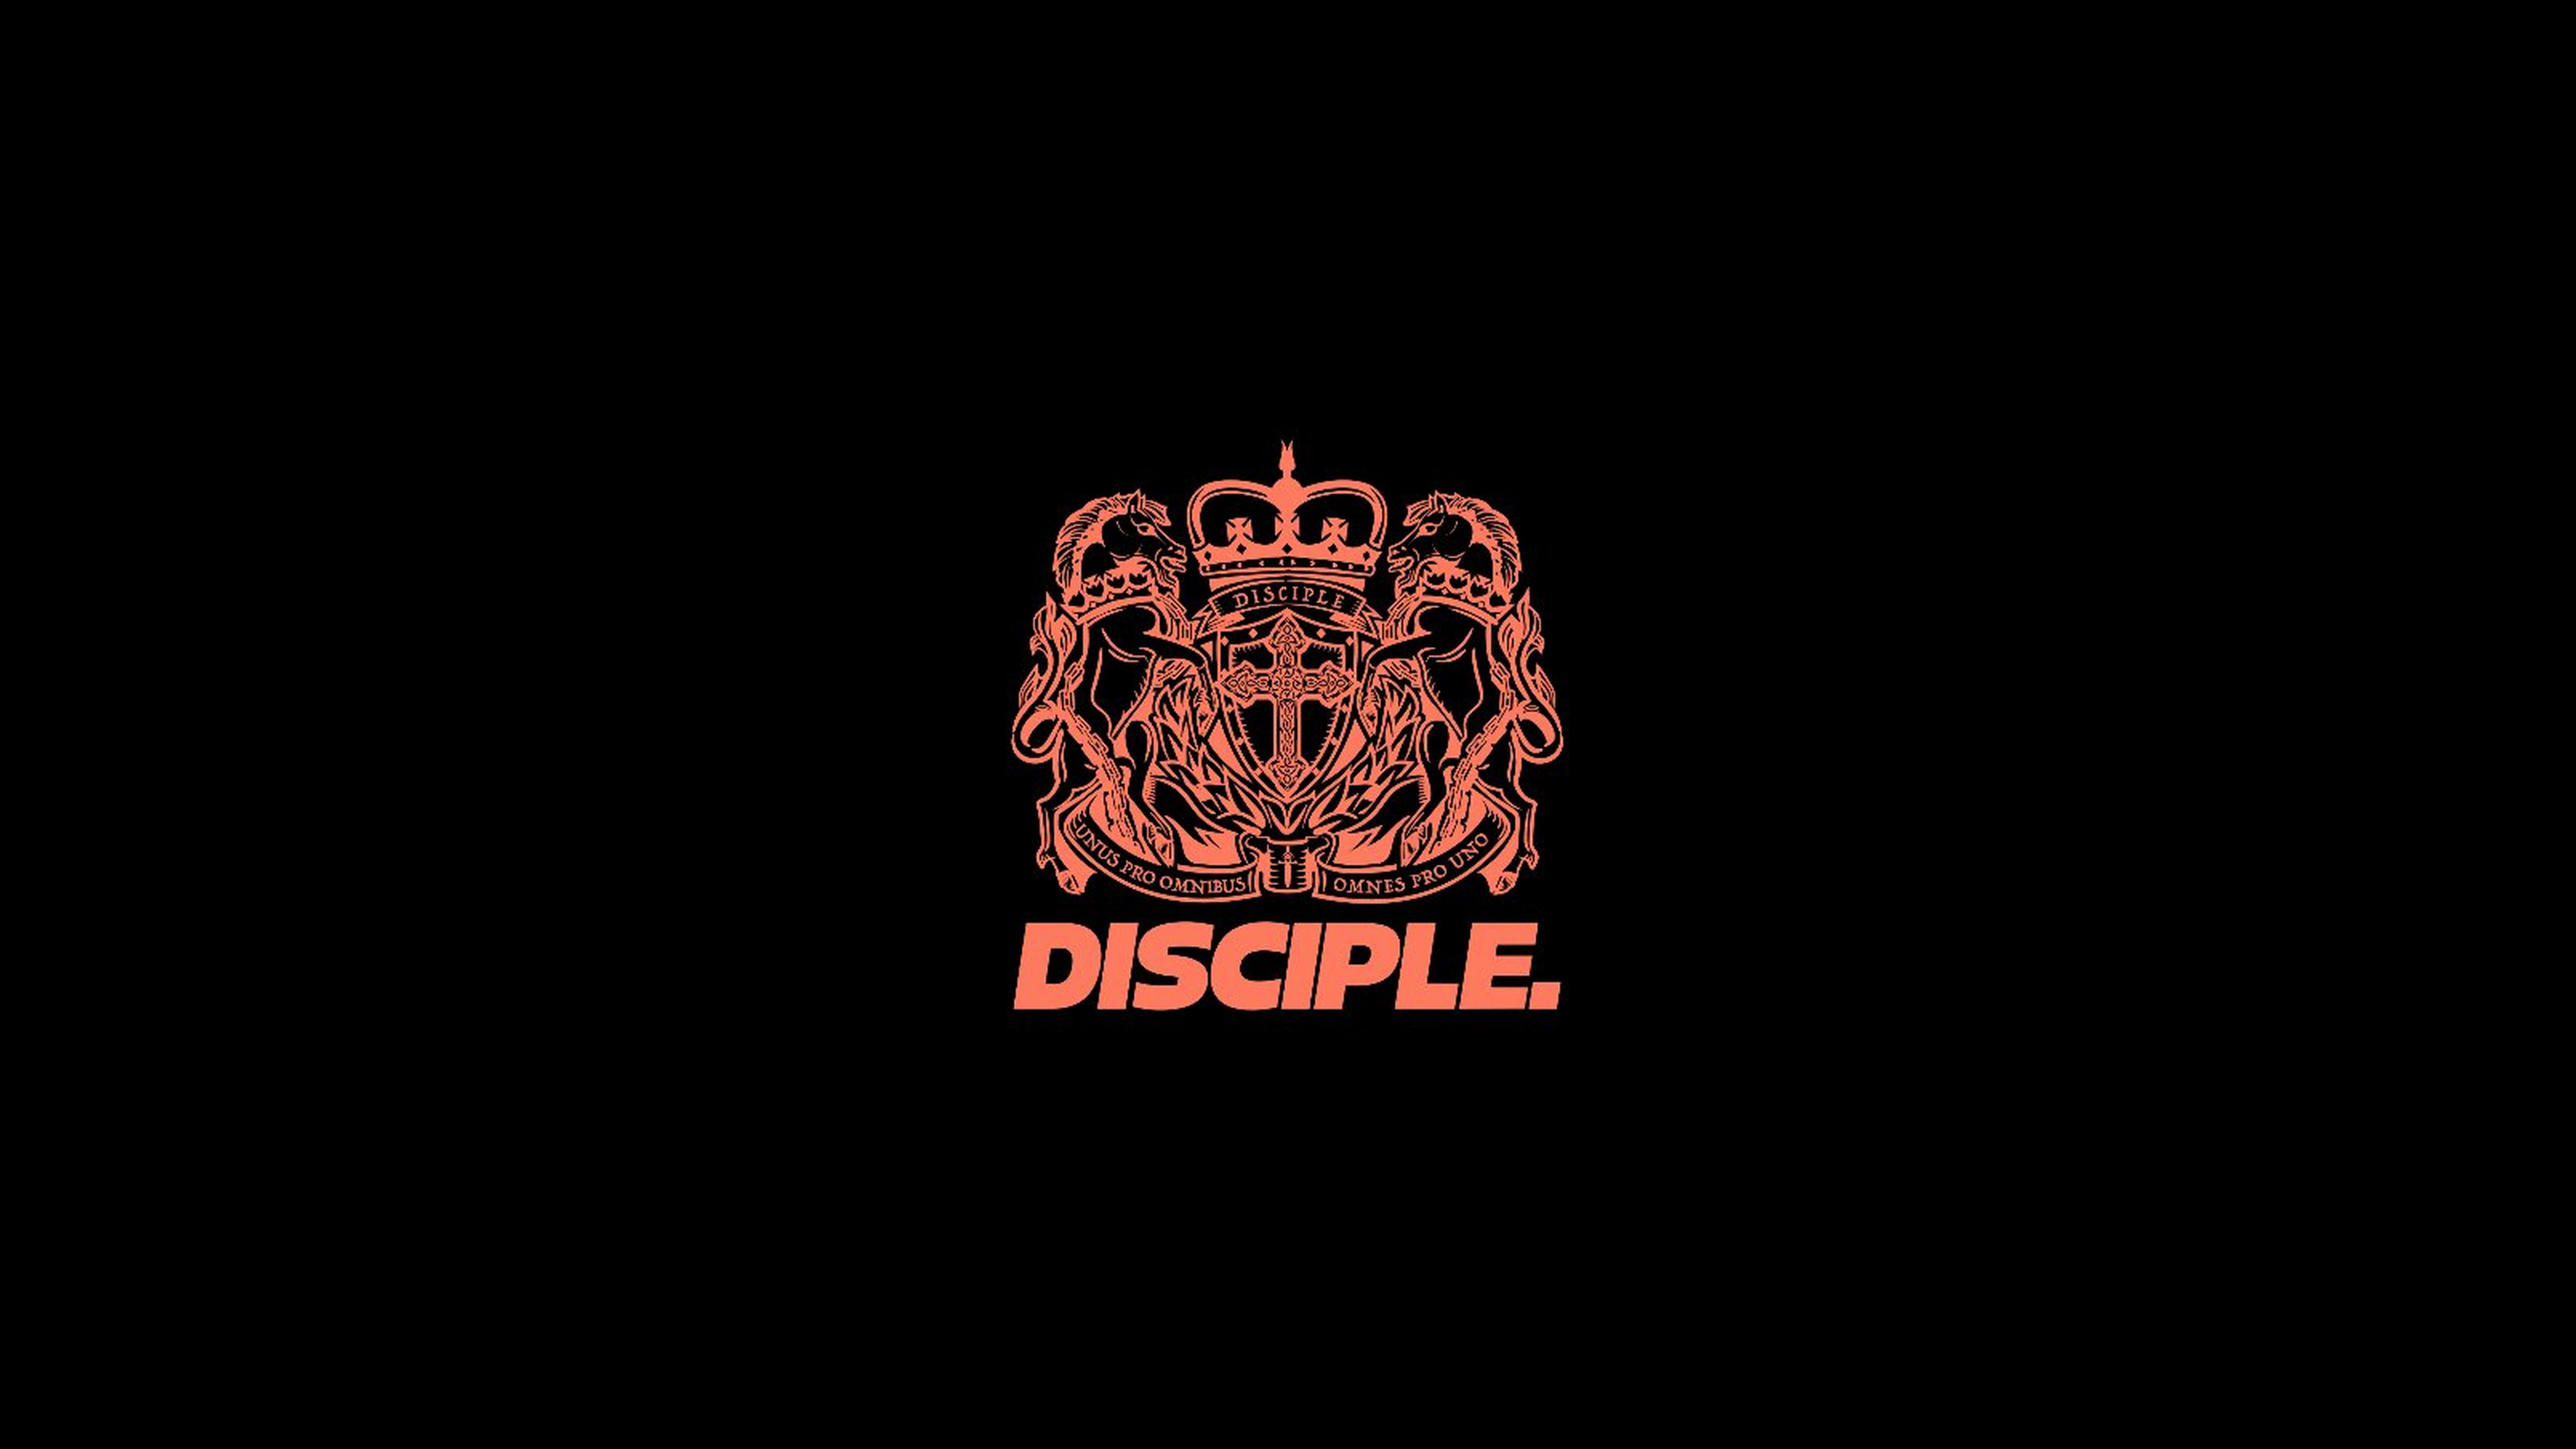 Disciple Dubstep Logo - Wallpaper : disciple, music, dubstep, black background, white, logo ...